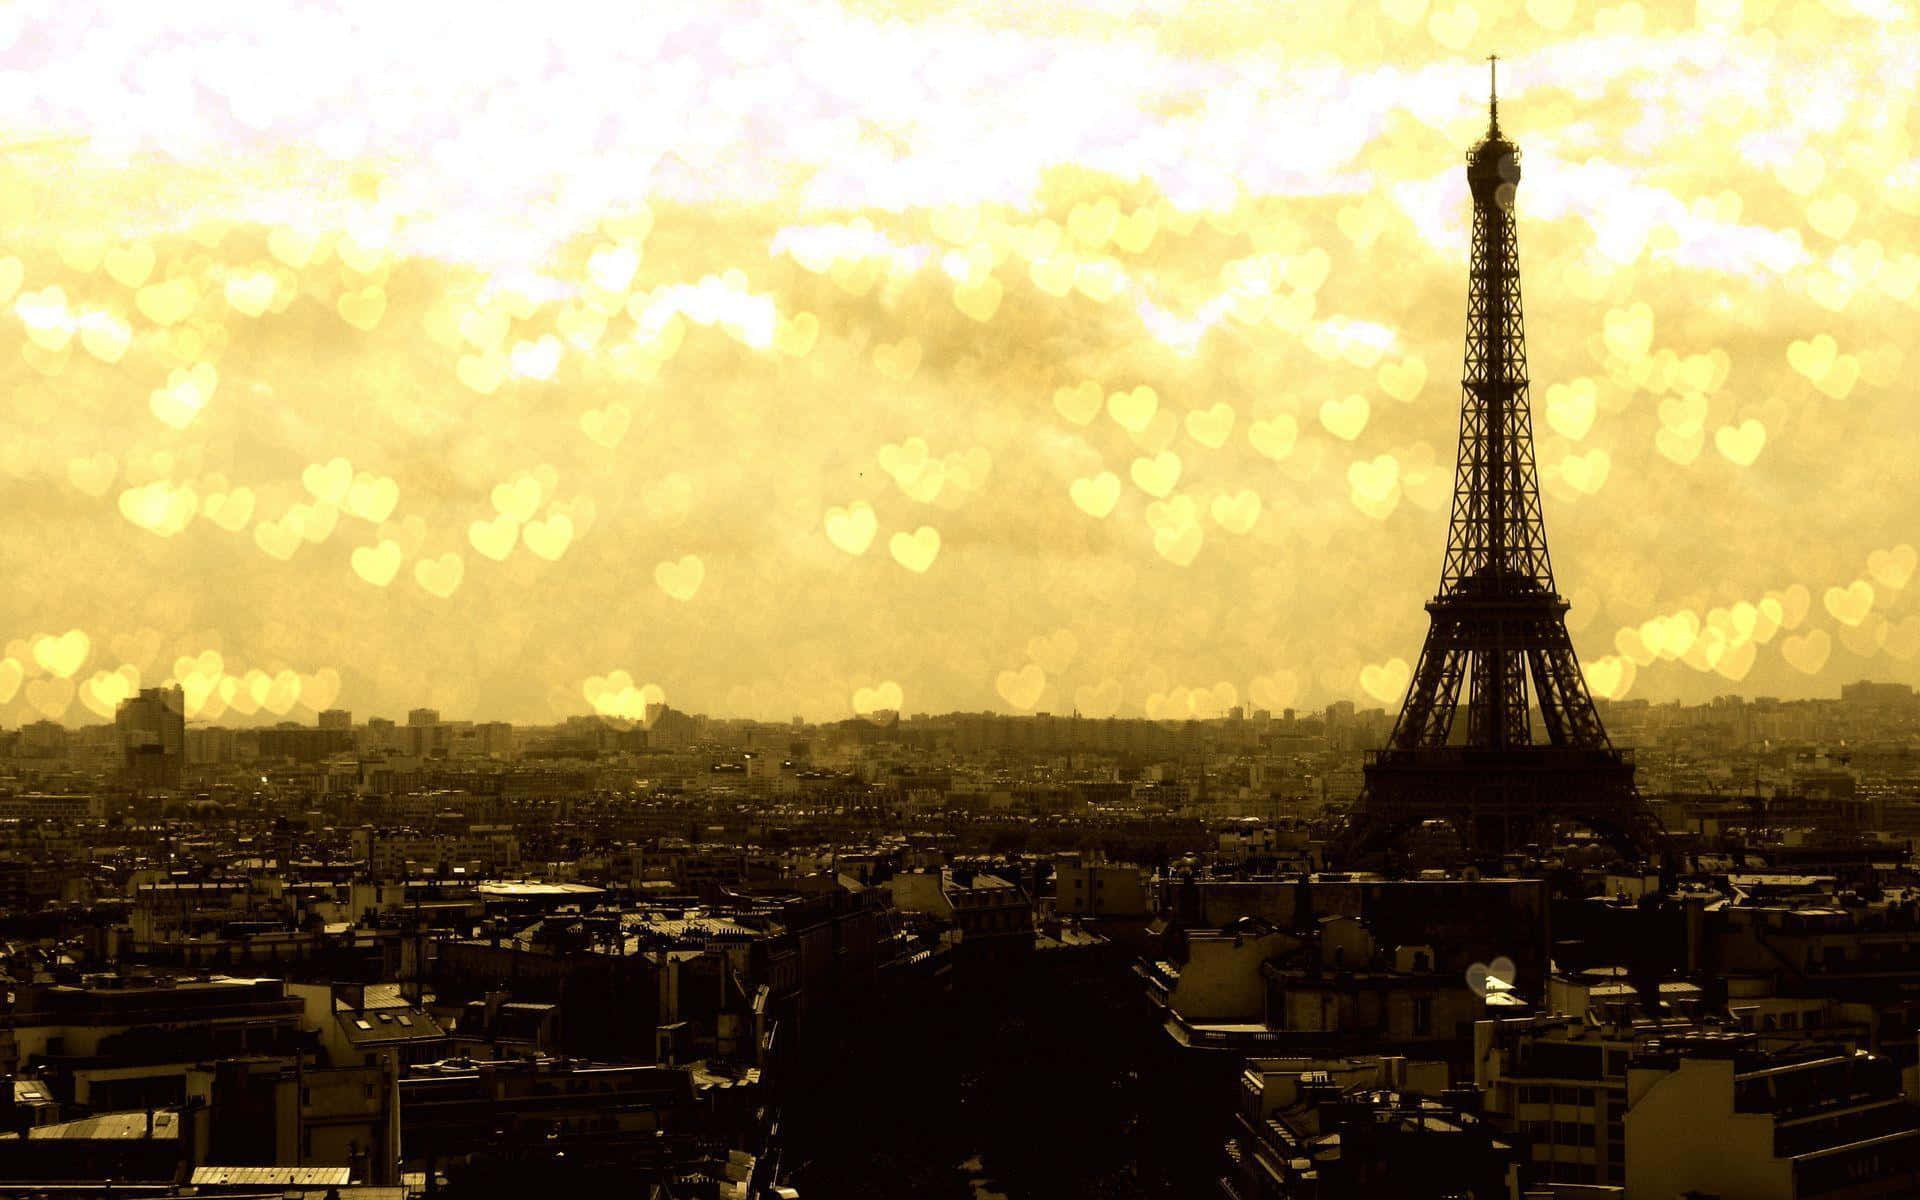 Belystandenatten I Paris, Den Ikoniska Eiffeltornet